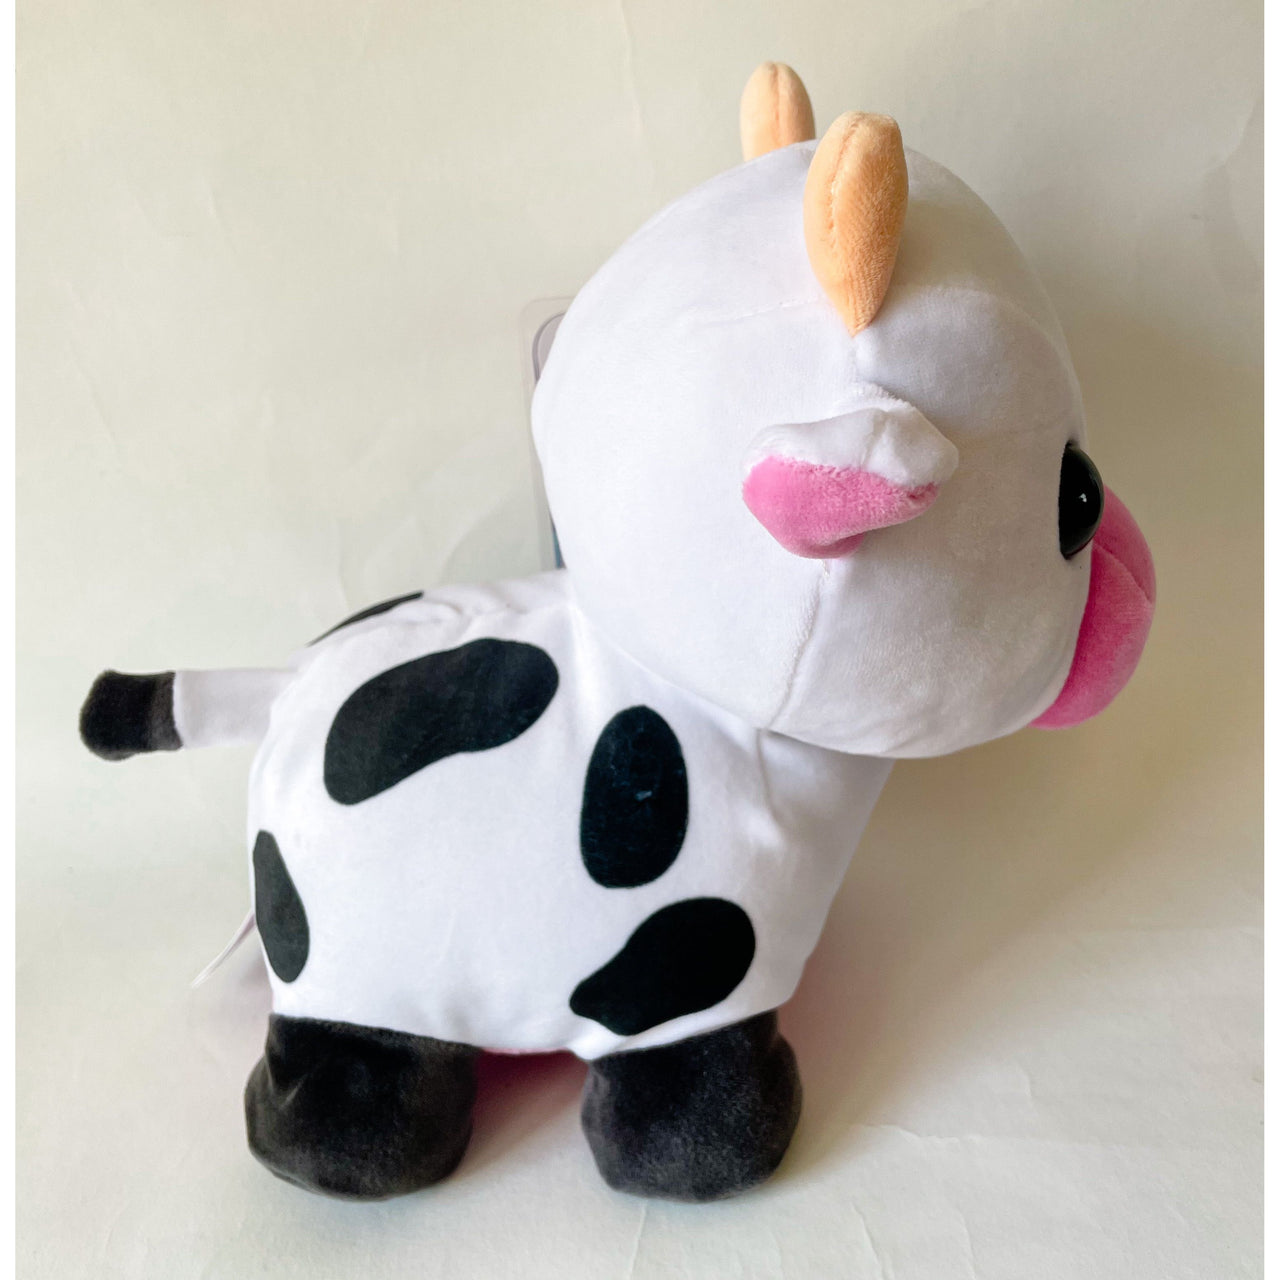 Adopt Me 8" Cow Collector Plush Adopt Me